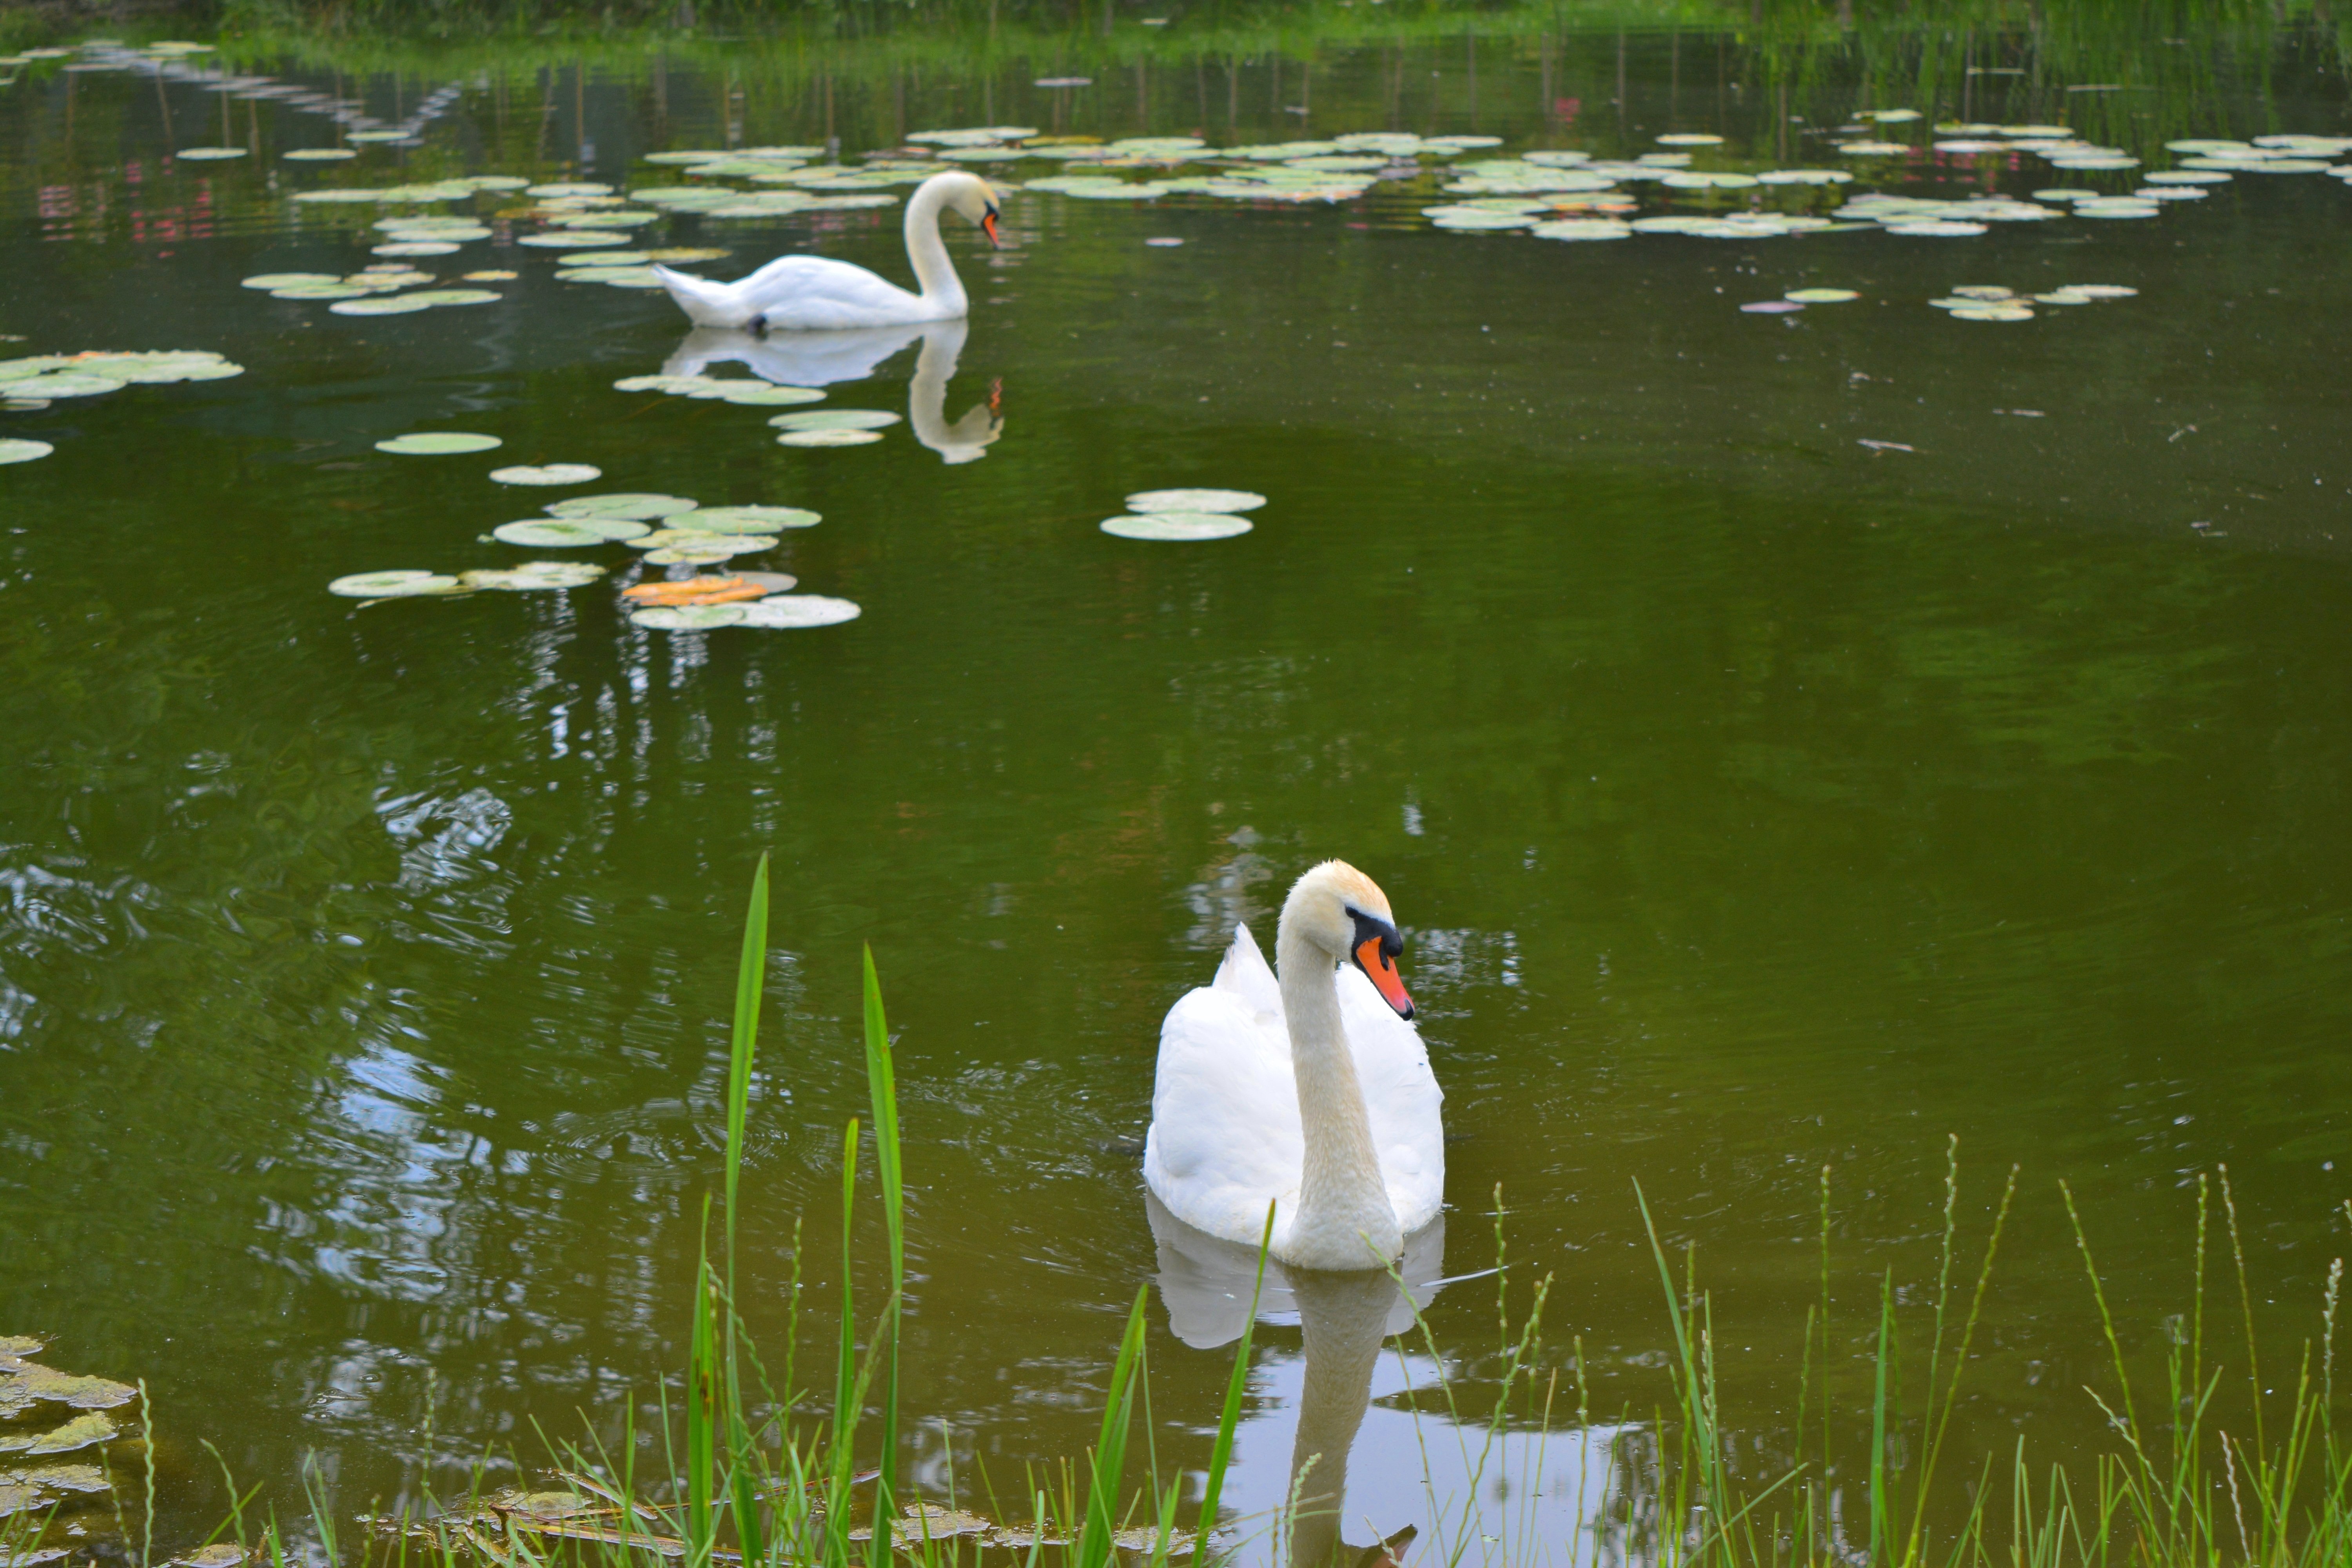 Будет озеро будут лебеди. Озеро с лебедями и утками. Лебеди на озере. Лебеди в пруду. Красивые лебеди на пруду.